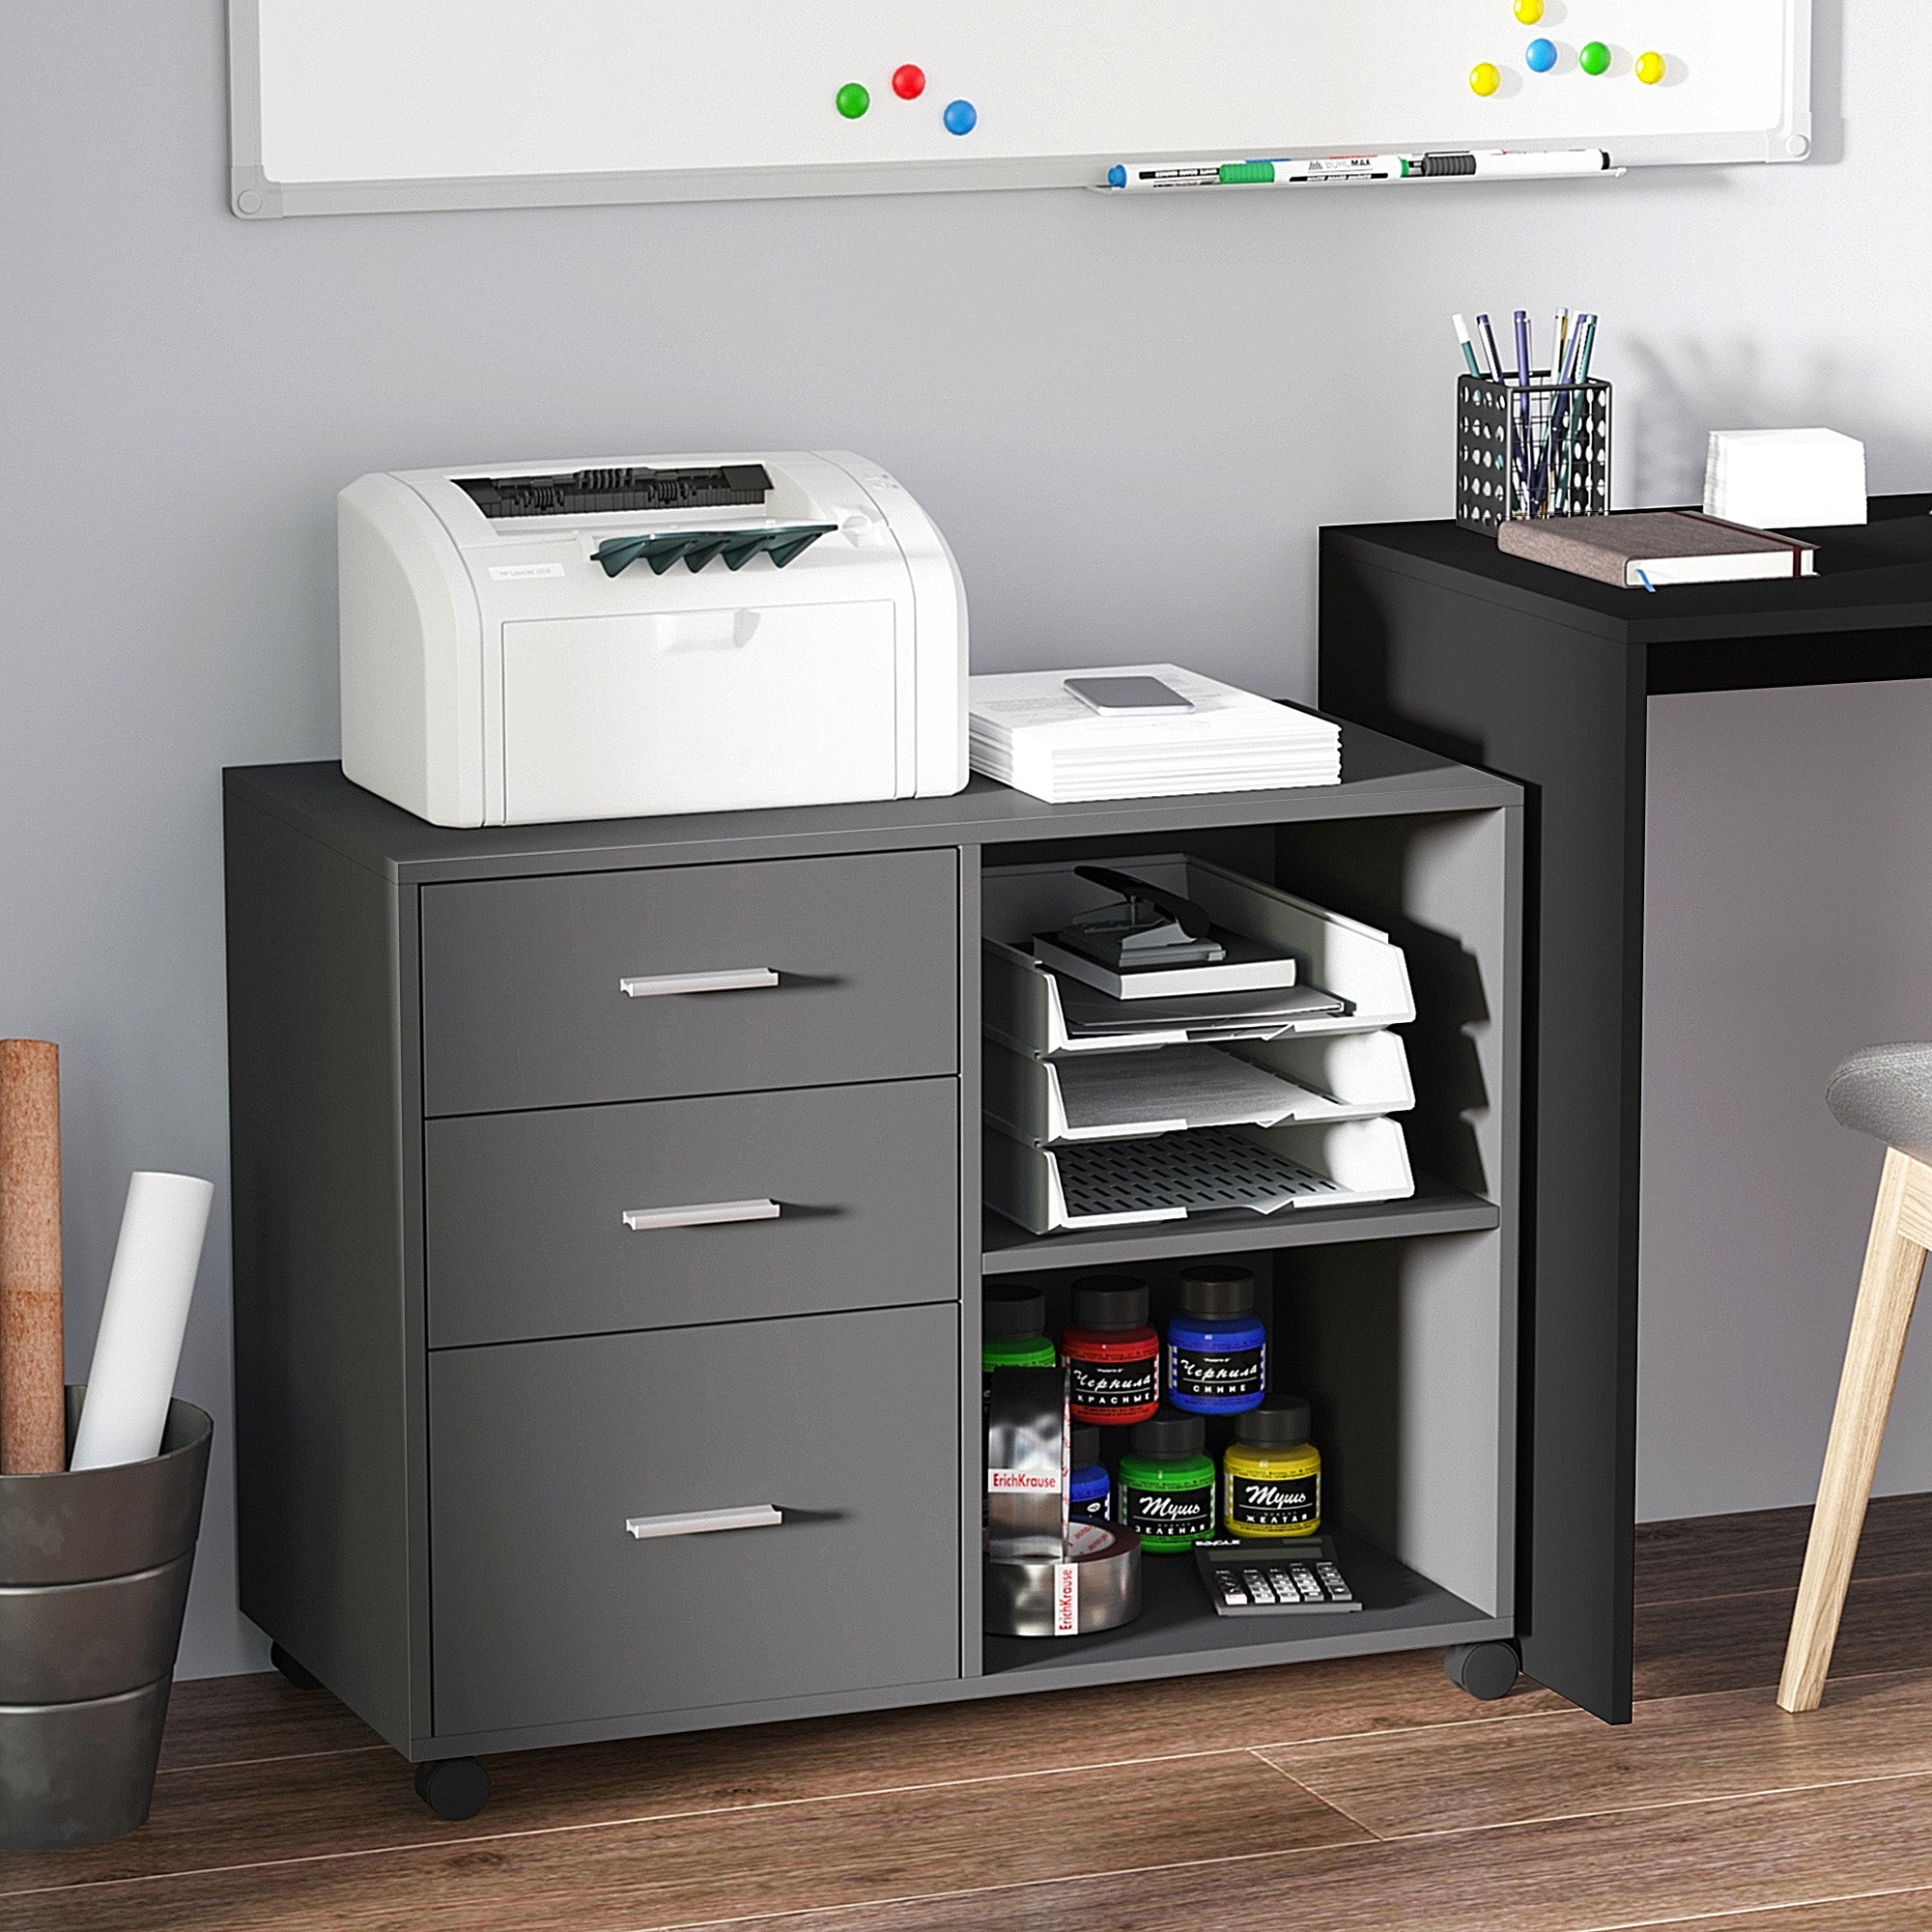 Freestanding Printer Stand Unit Office Desk Side Mobile Storage w/ Wheels 3 Drawers, 2 Open Shelves Modern Style 80L x 40W x 65H cm - Grey-1